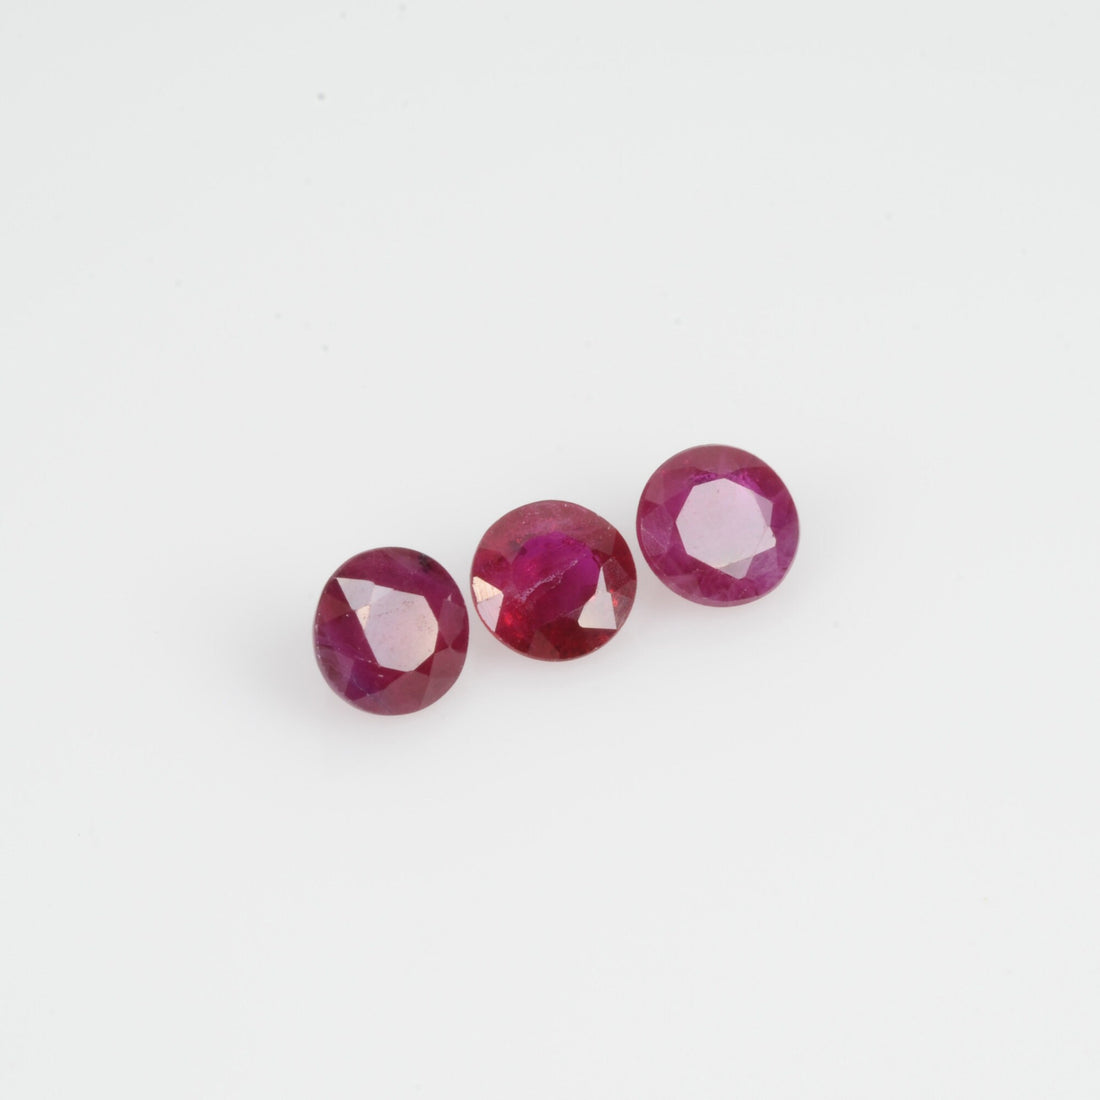 3.7-4.3 mm Natural Ruby Loose Gemstone Round Cut